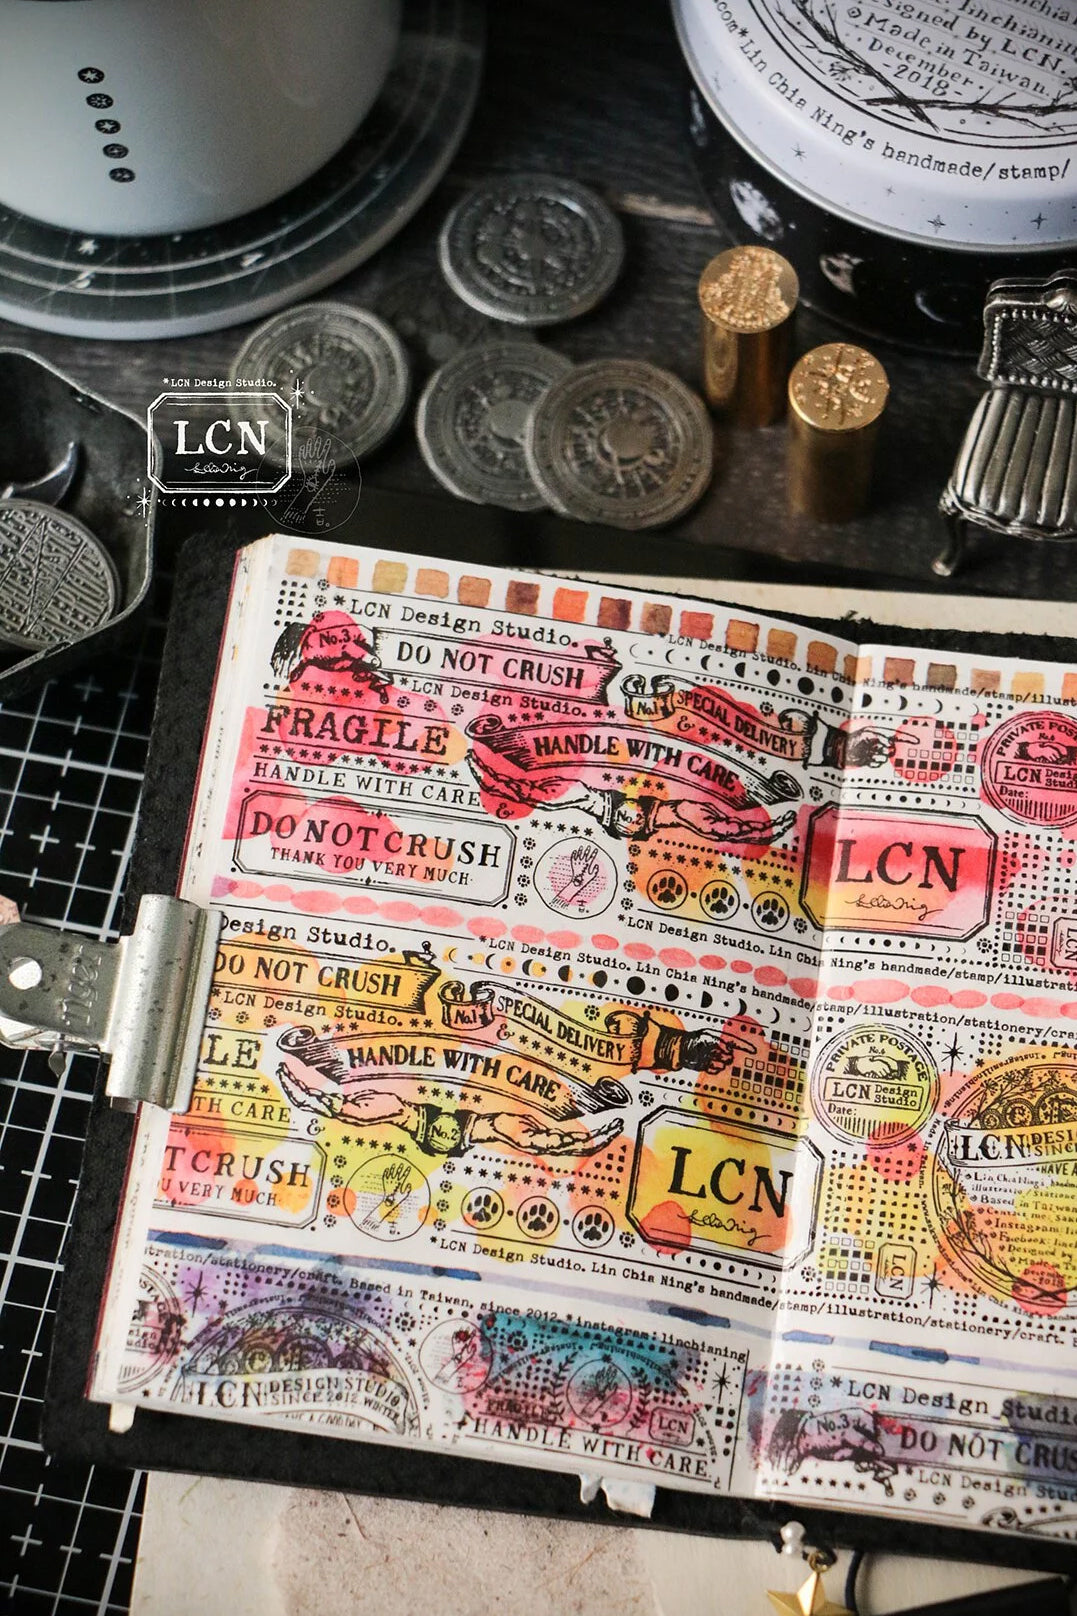 LCN Design Studio: Warm Color Watercolor Splotches Print On Stickers